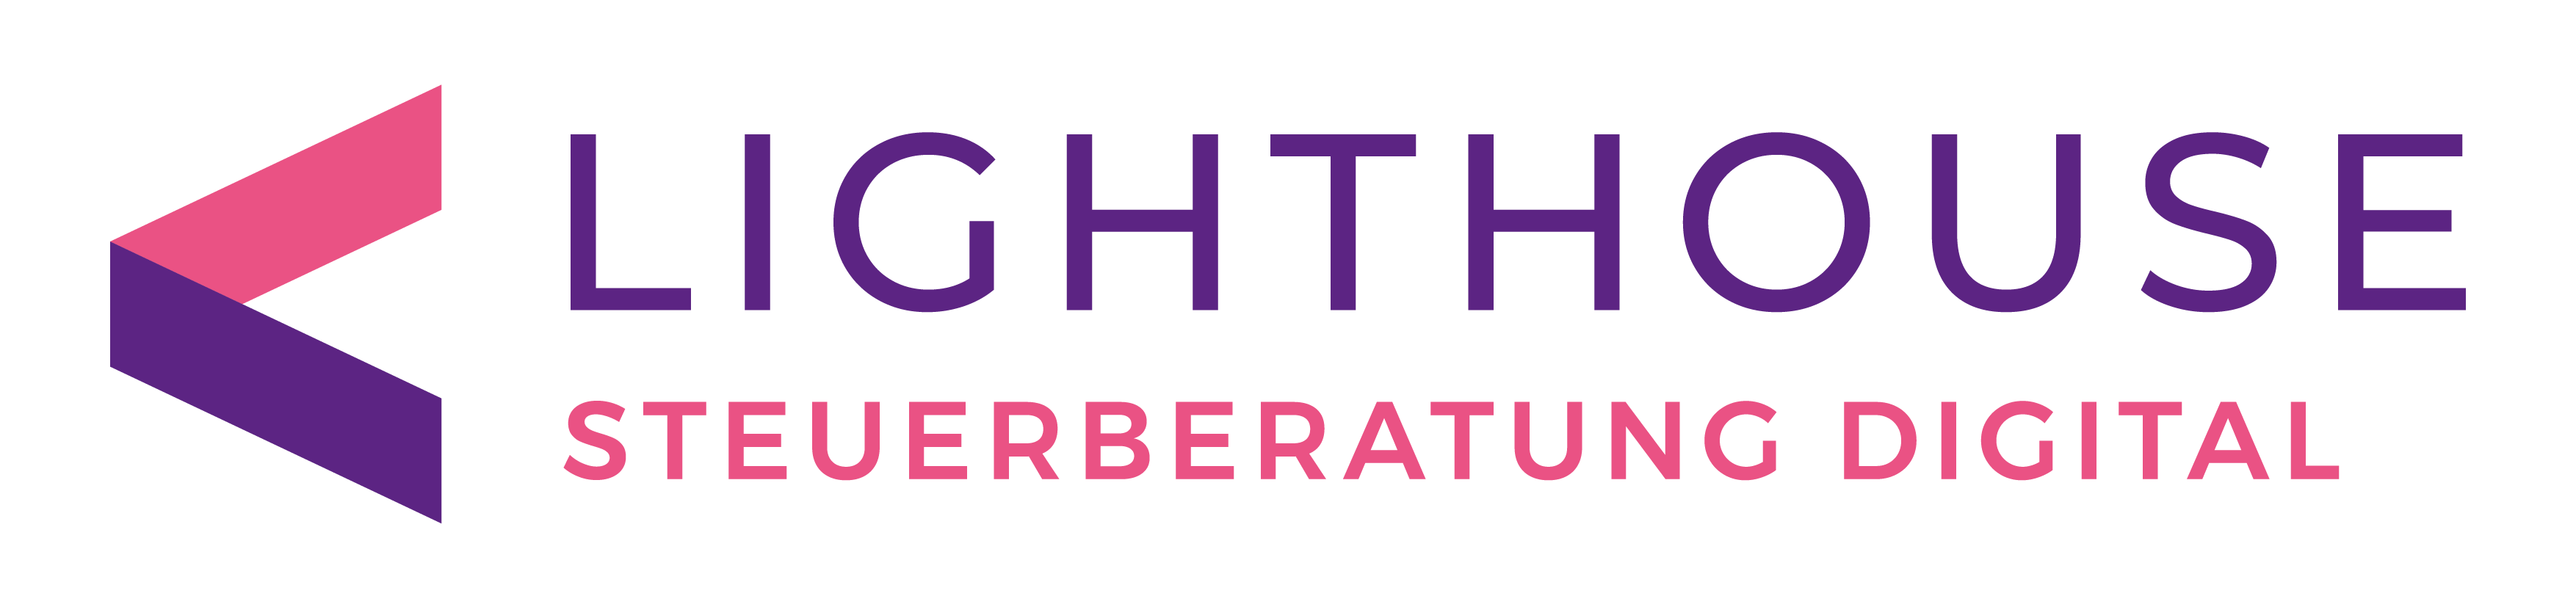 Lighthouse-DIGITAL-Logo-ohne-Verlauf.png